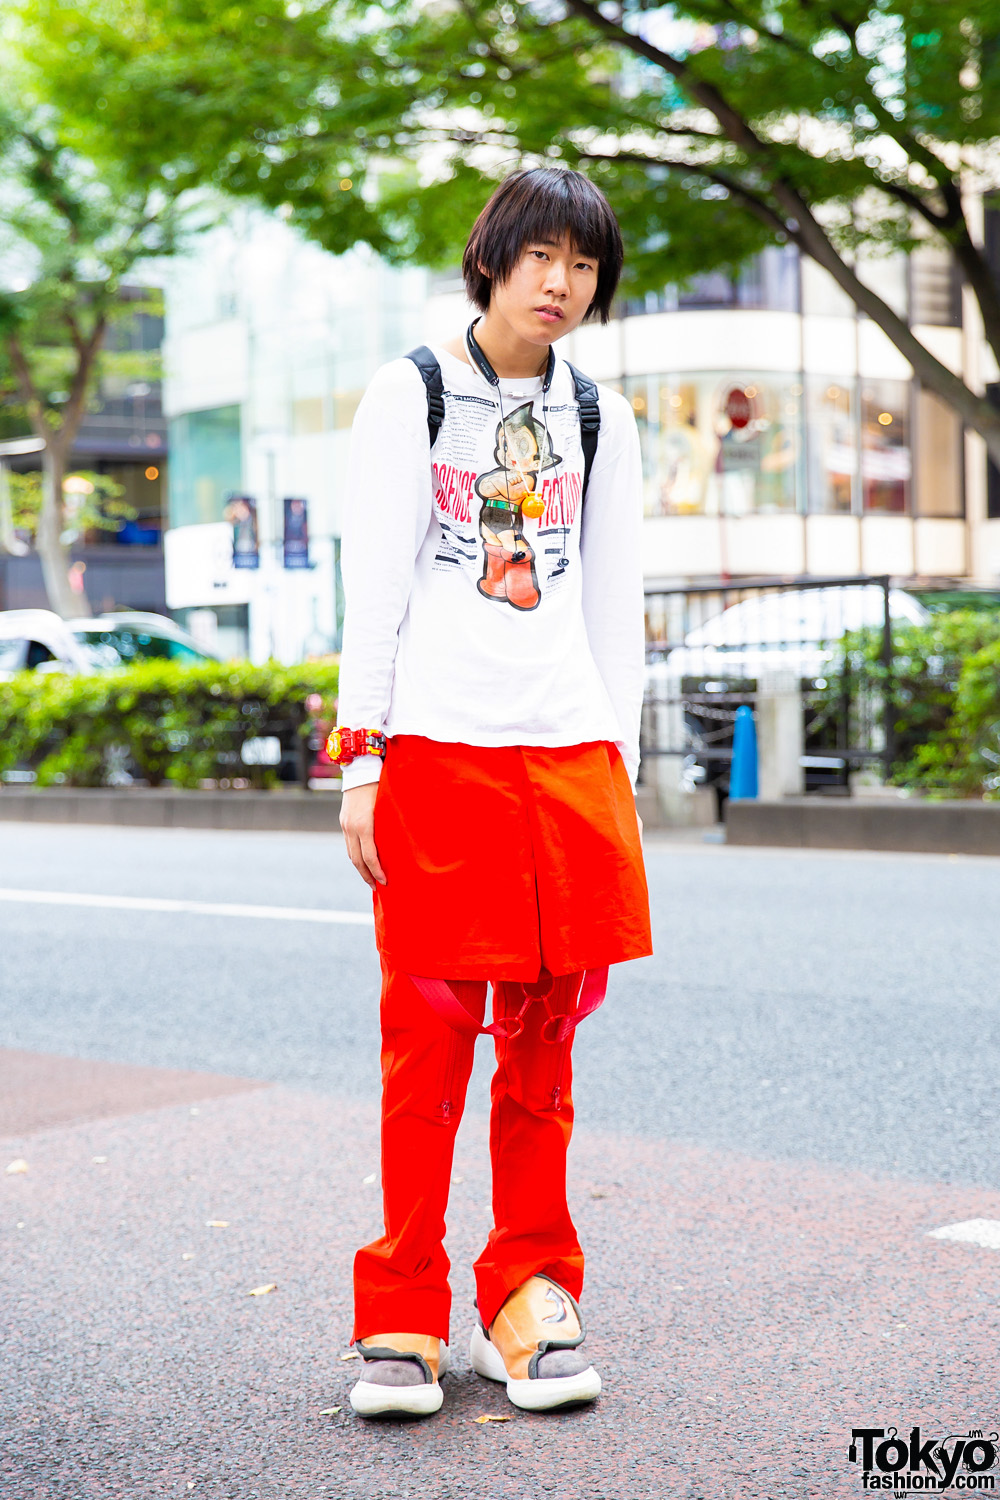 Red & White Harajuku Streetwear Style w/ Astro Boy Sweatshirt, Walter Van Beirendonck Strap Pants, Skirt Panel, Swear Velcro Sneakers & Robot Watch